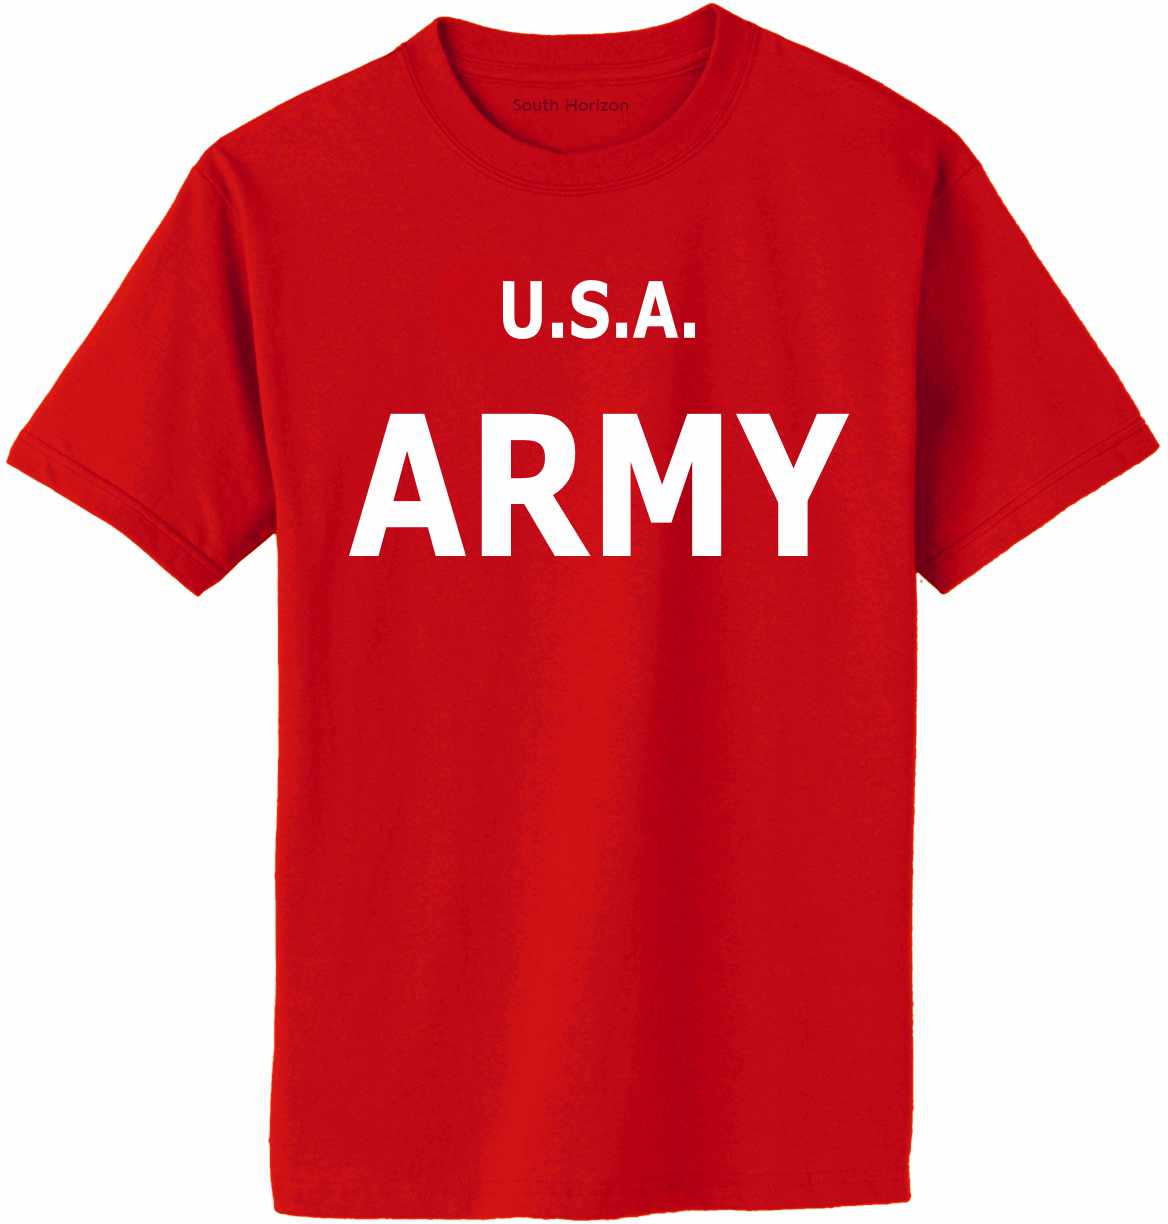 USA ARMY Adult T-Shirt (#374-1)